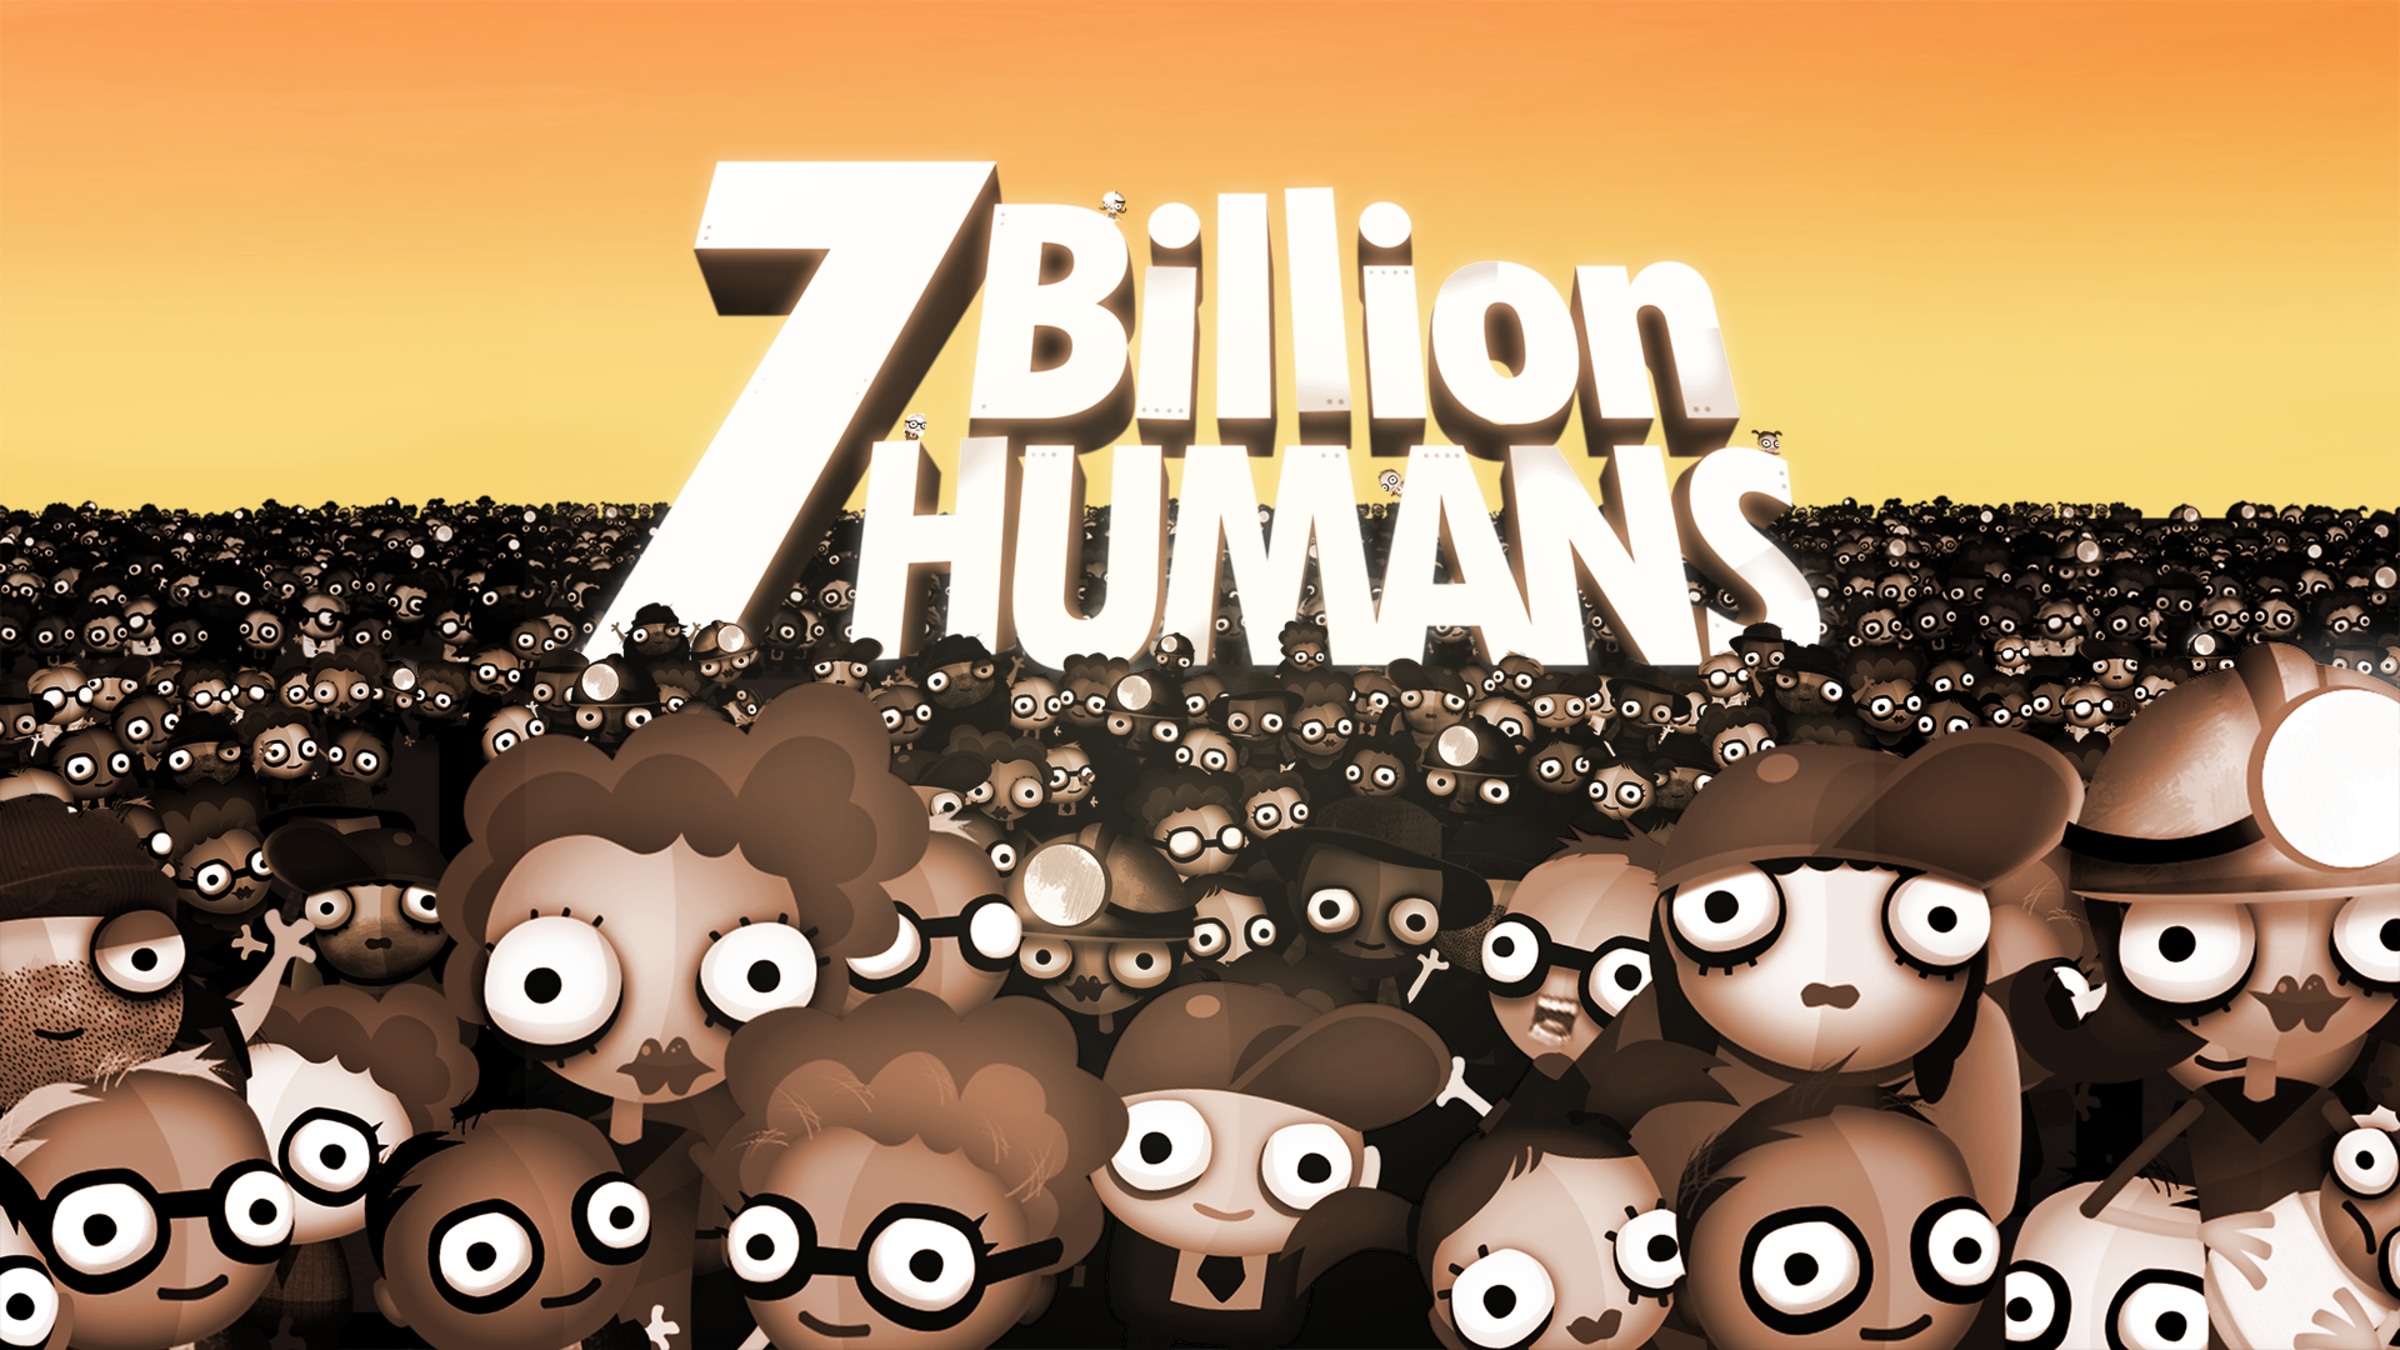 creative writing 7 billion humans